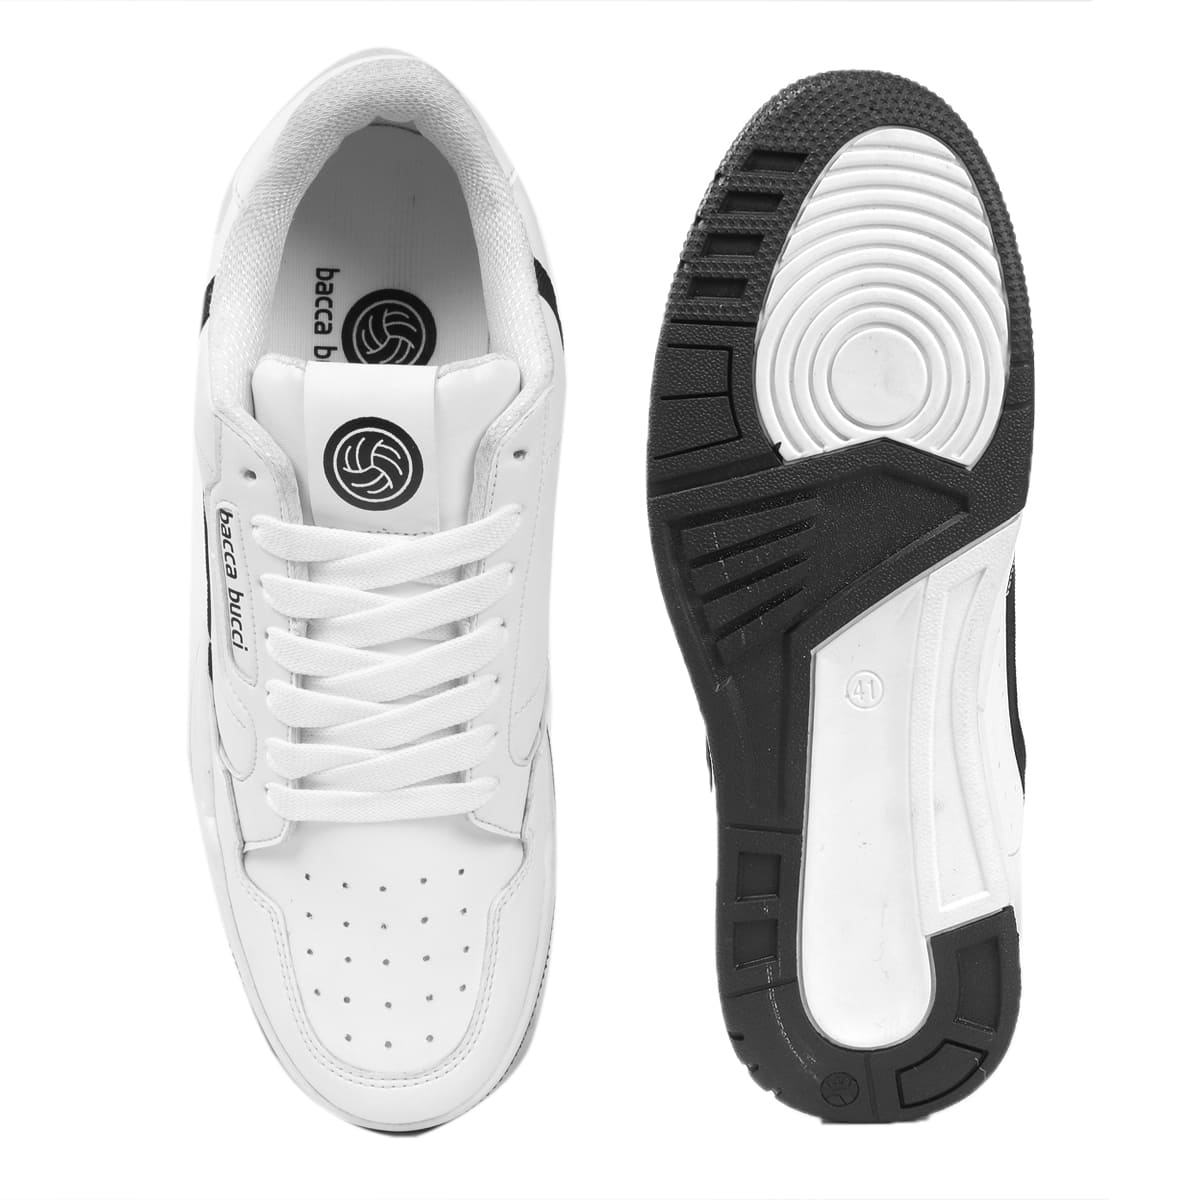 men's white sneakers